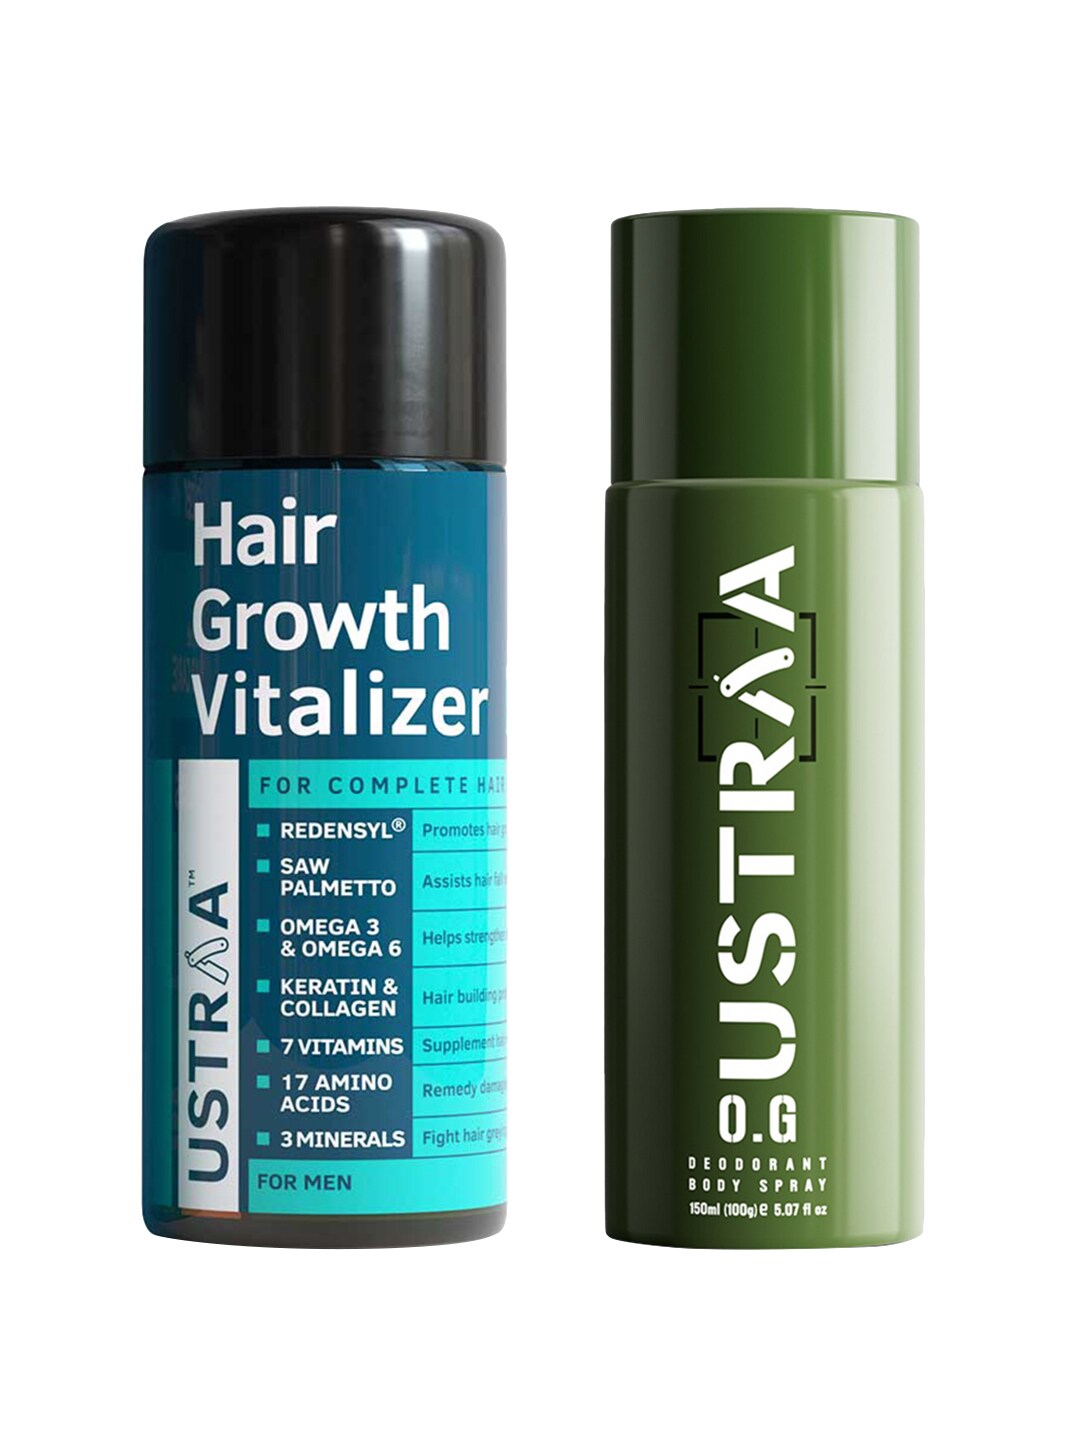 Ustraa Hair Growth Vitalizer - Buy Best Hair Vitalizer Online in India